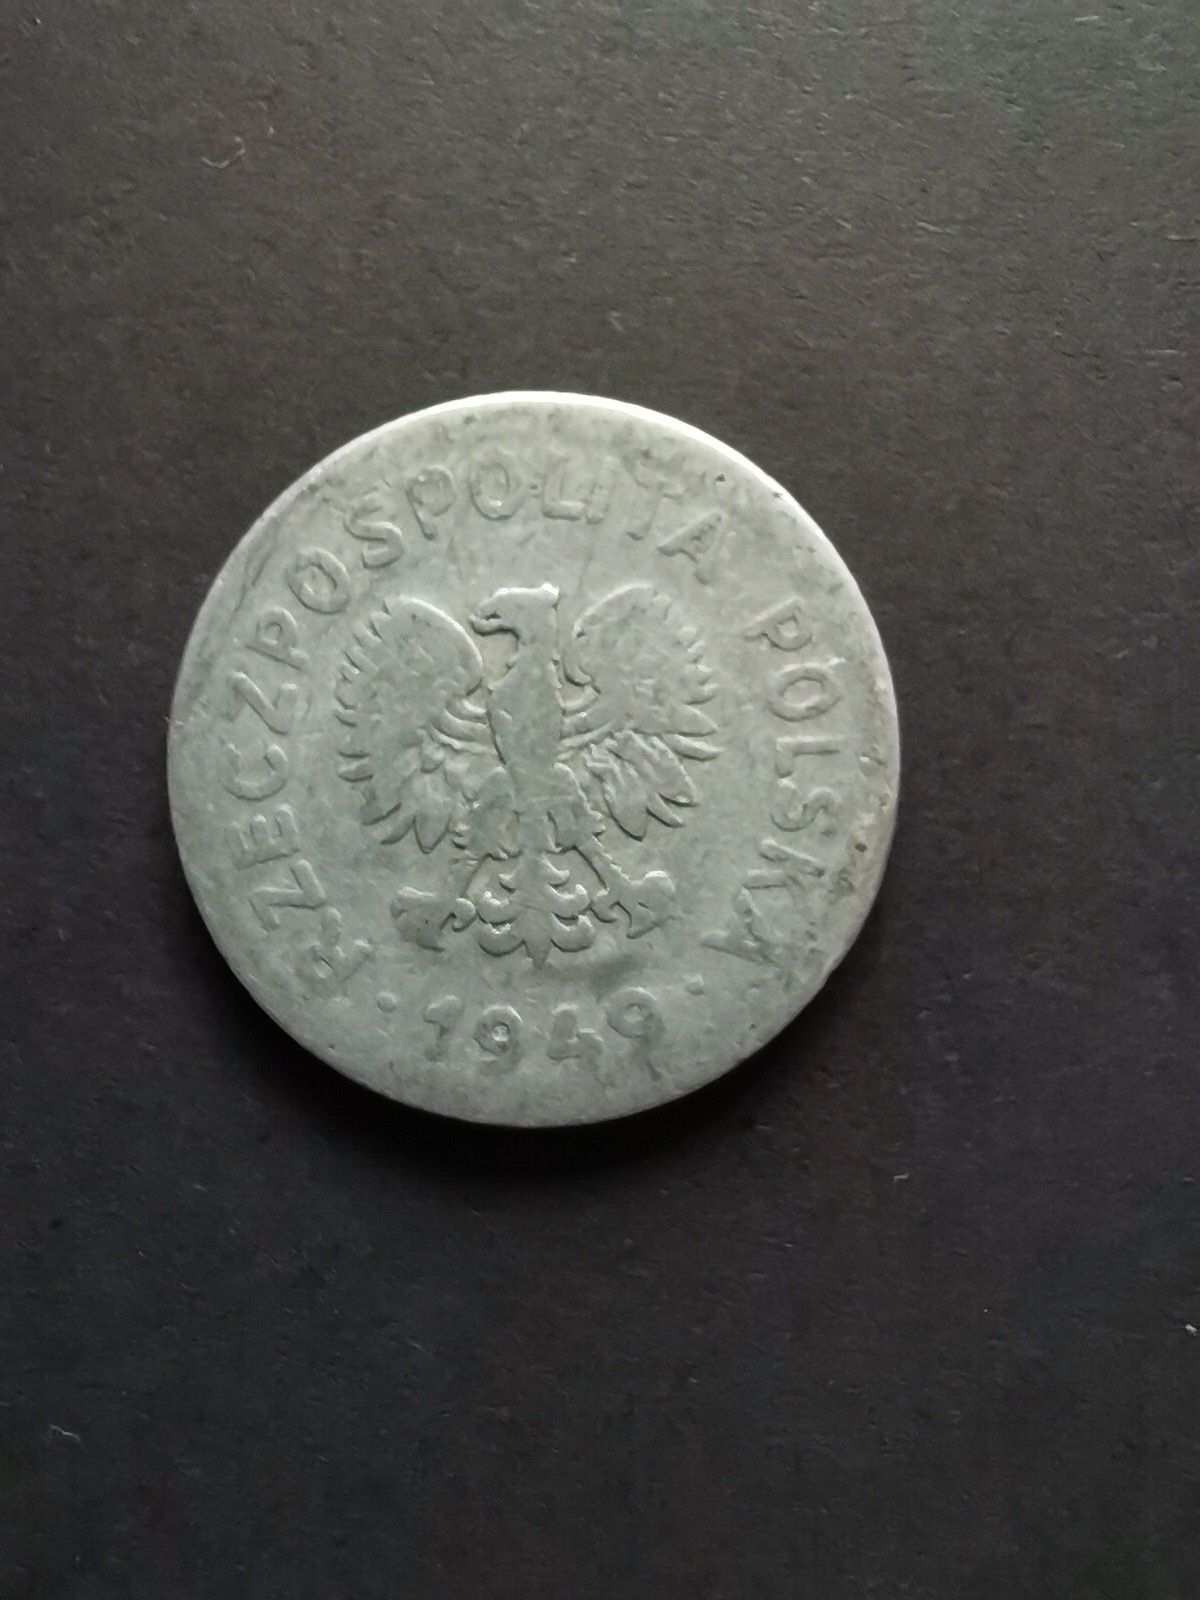 Moneta 1 zł z 1949r.